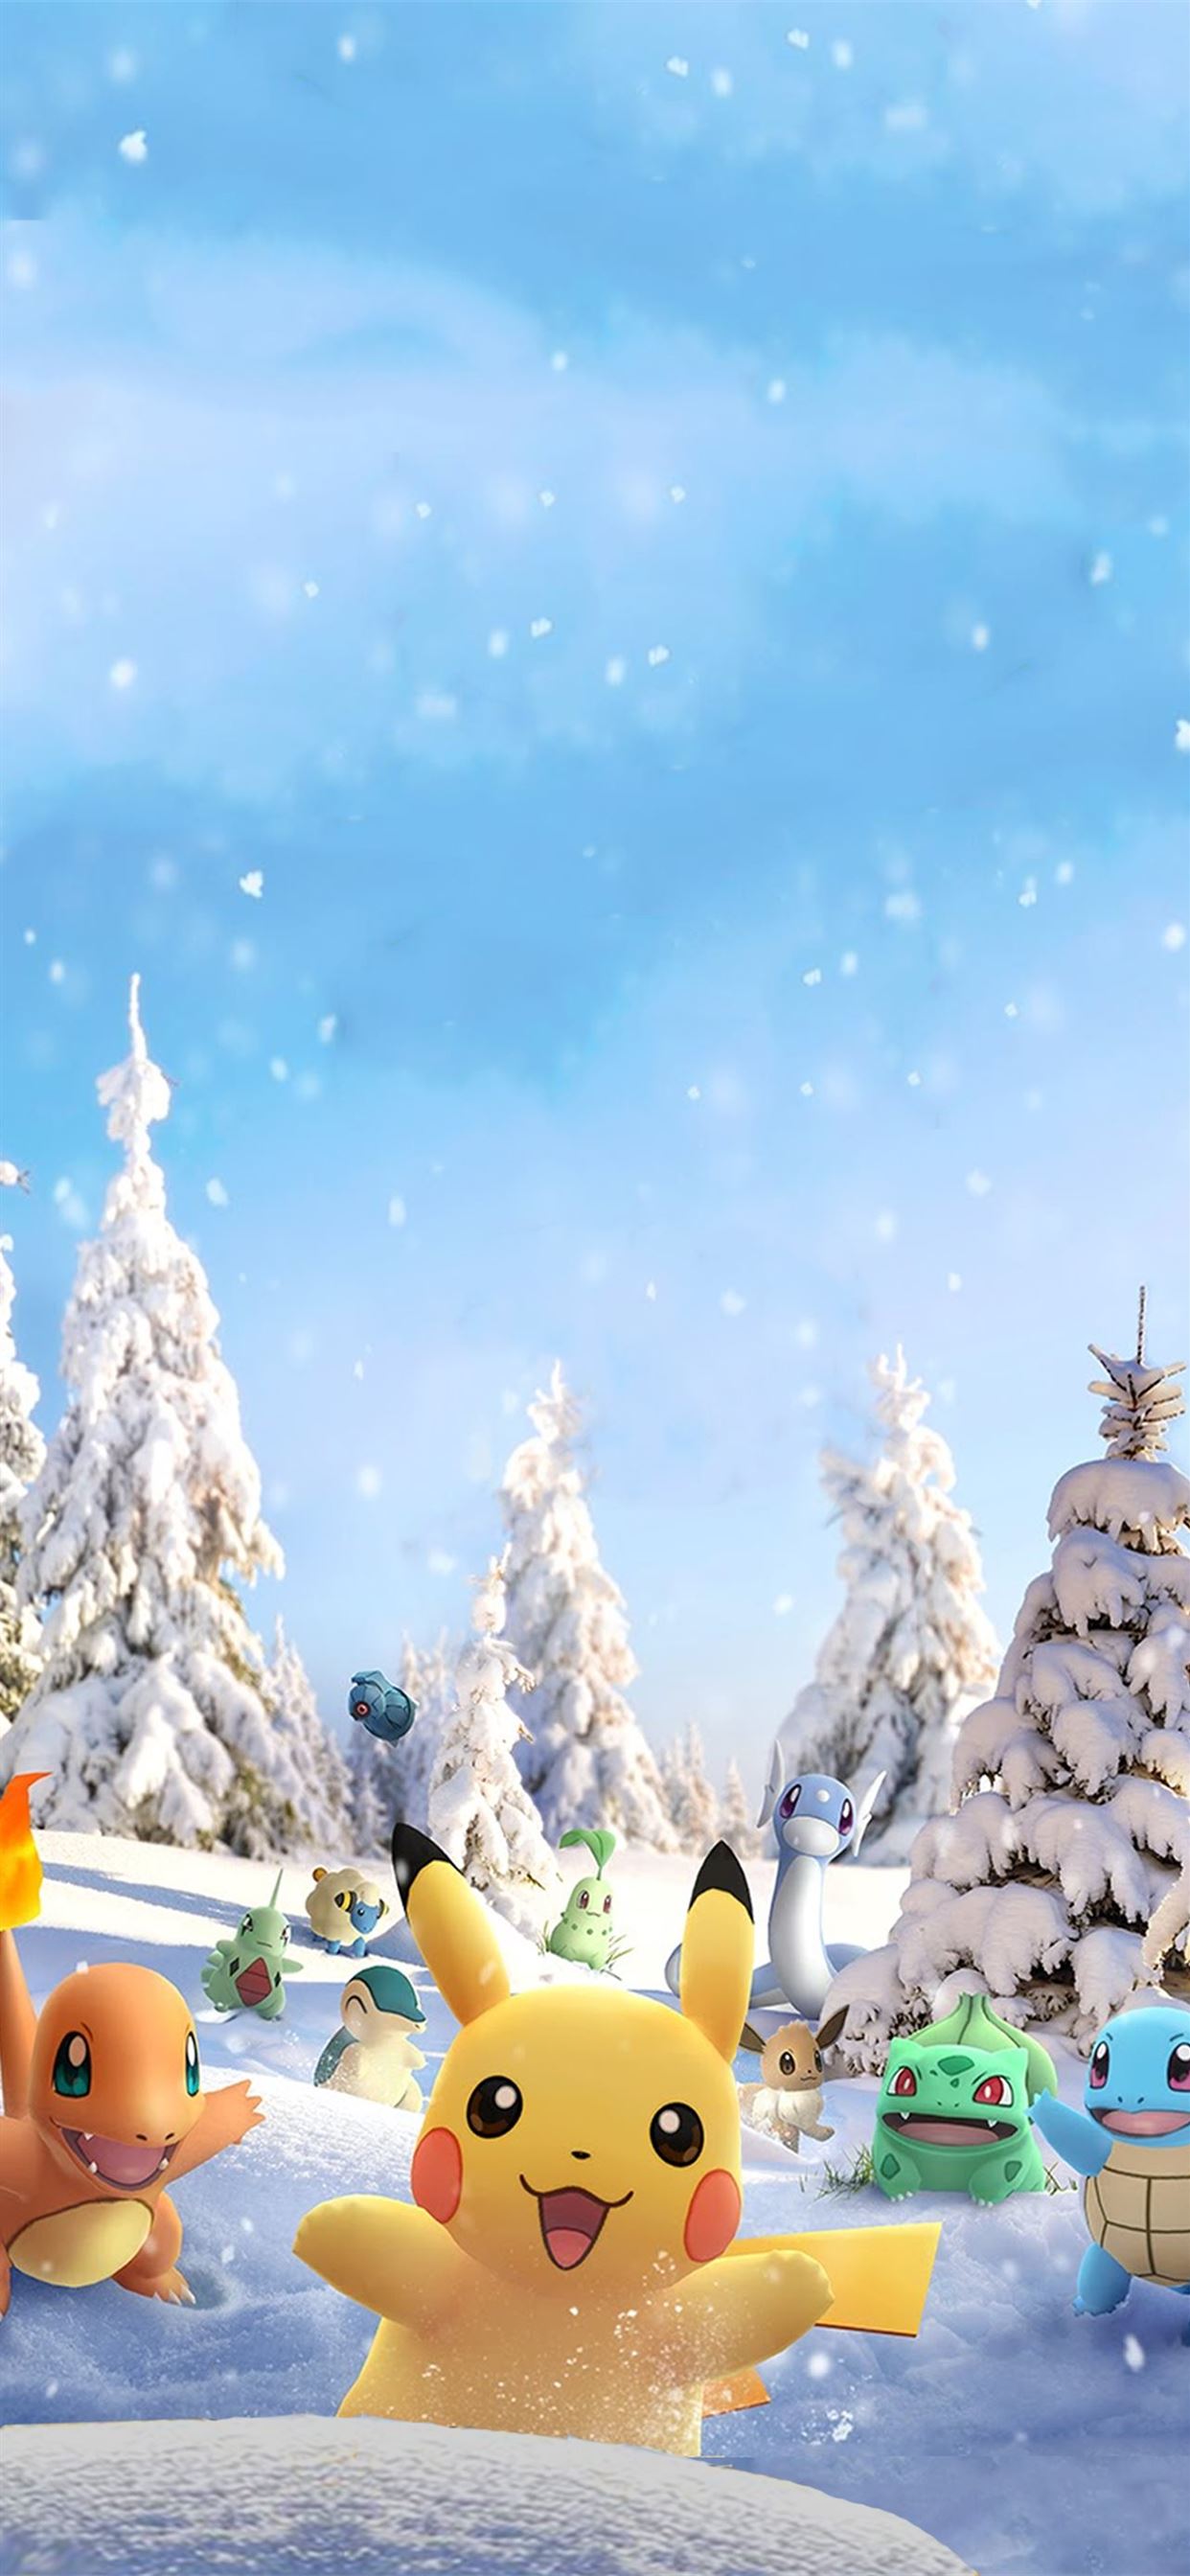 Pokemon Go Winter iPhone Wallpaper